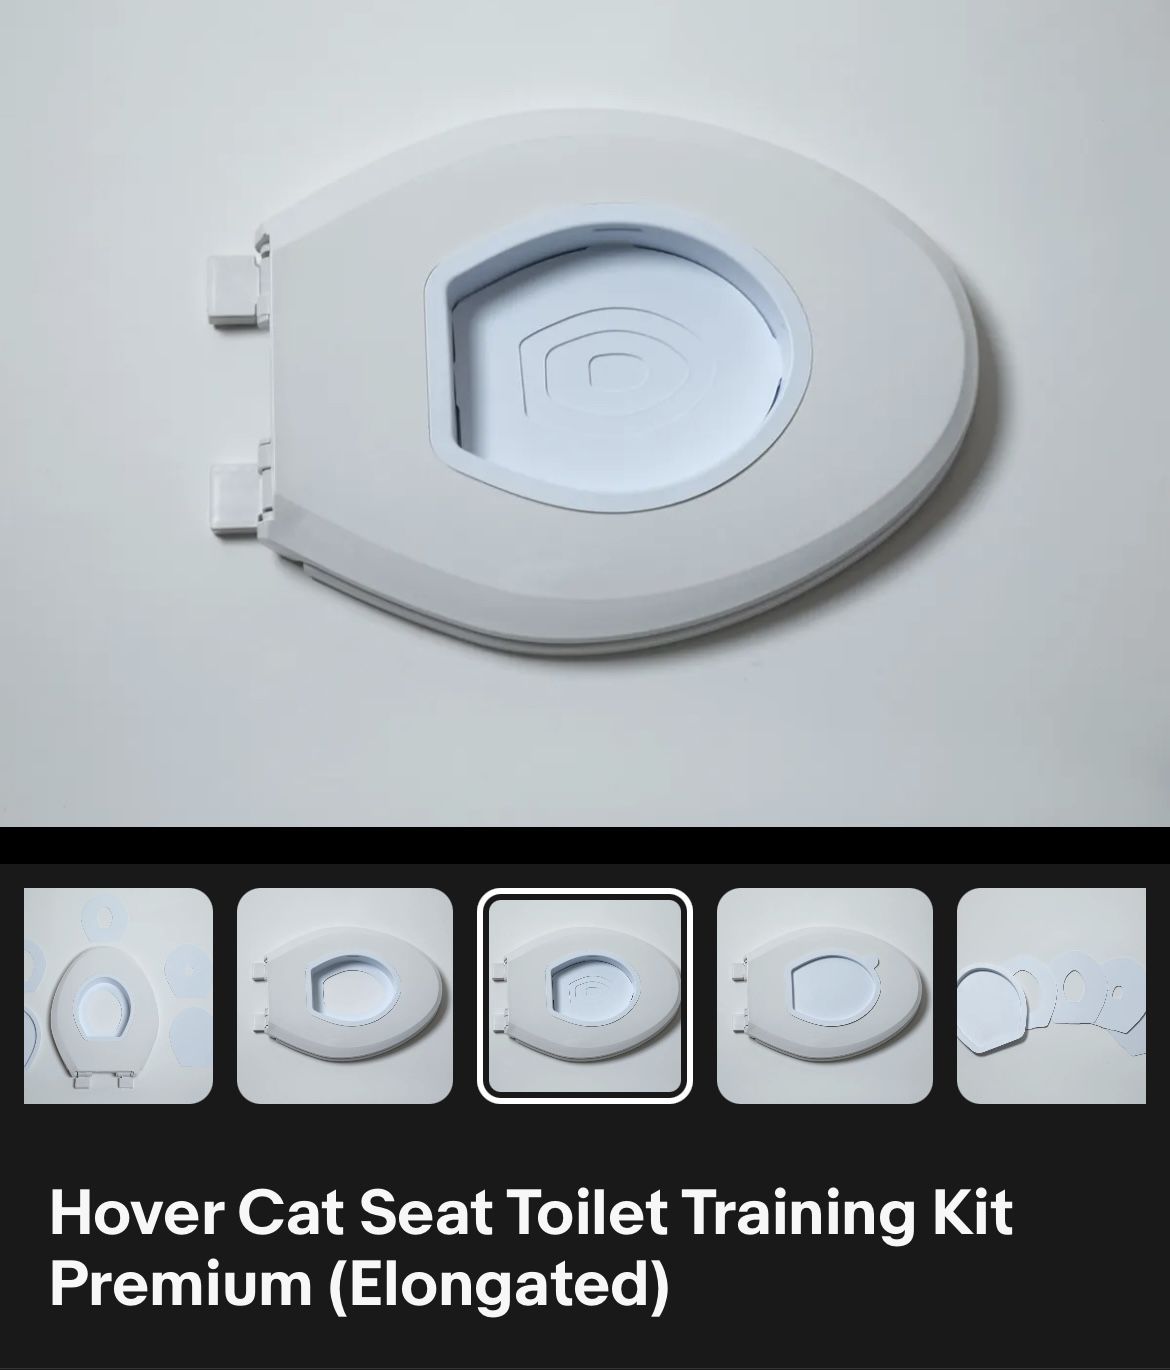 Hover Cat Seat Toilet Training Kit (Elongated)